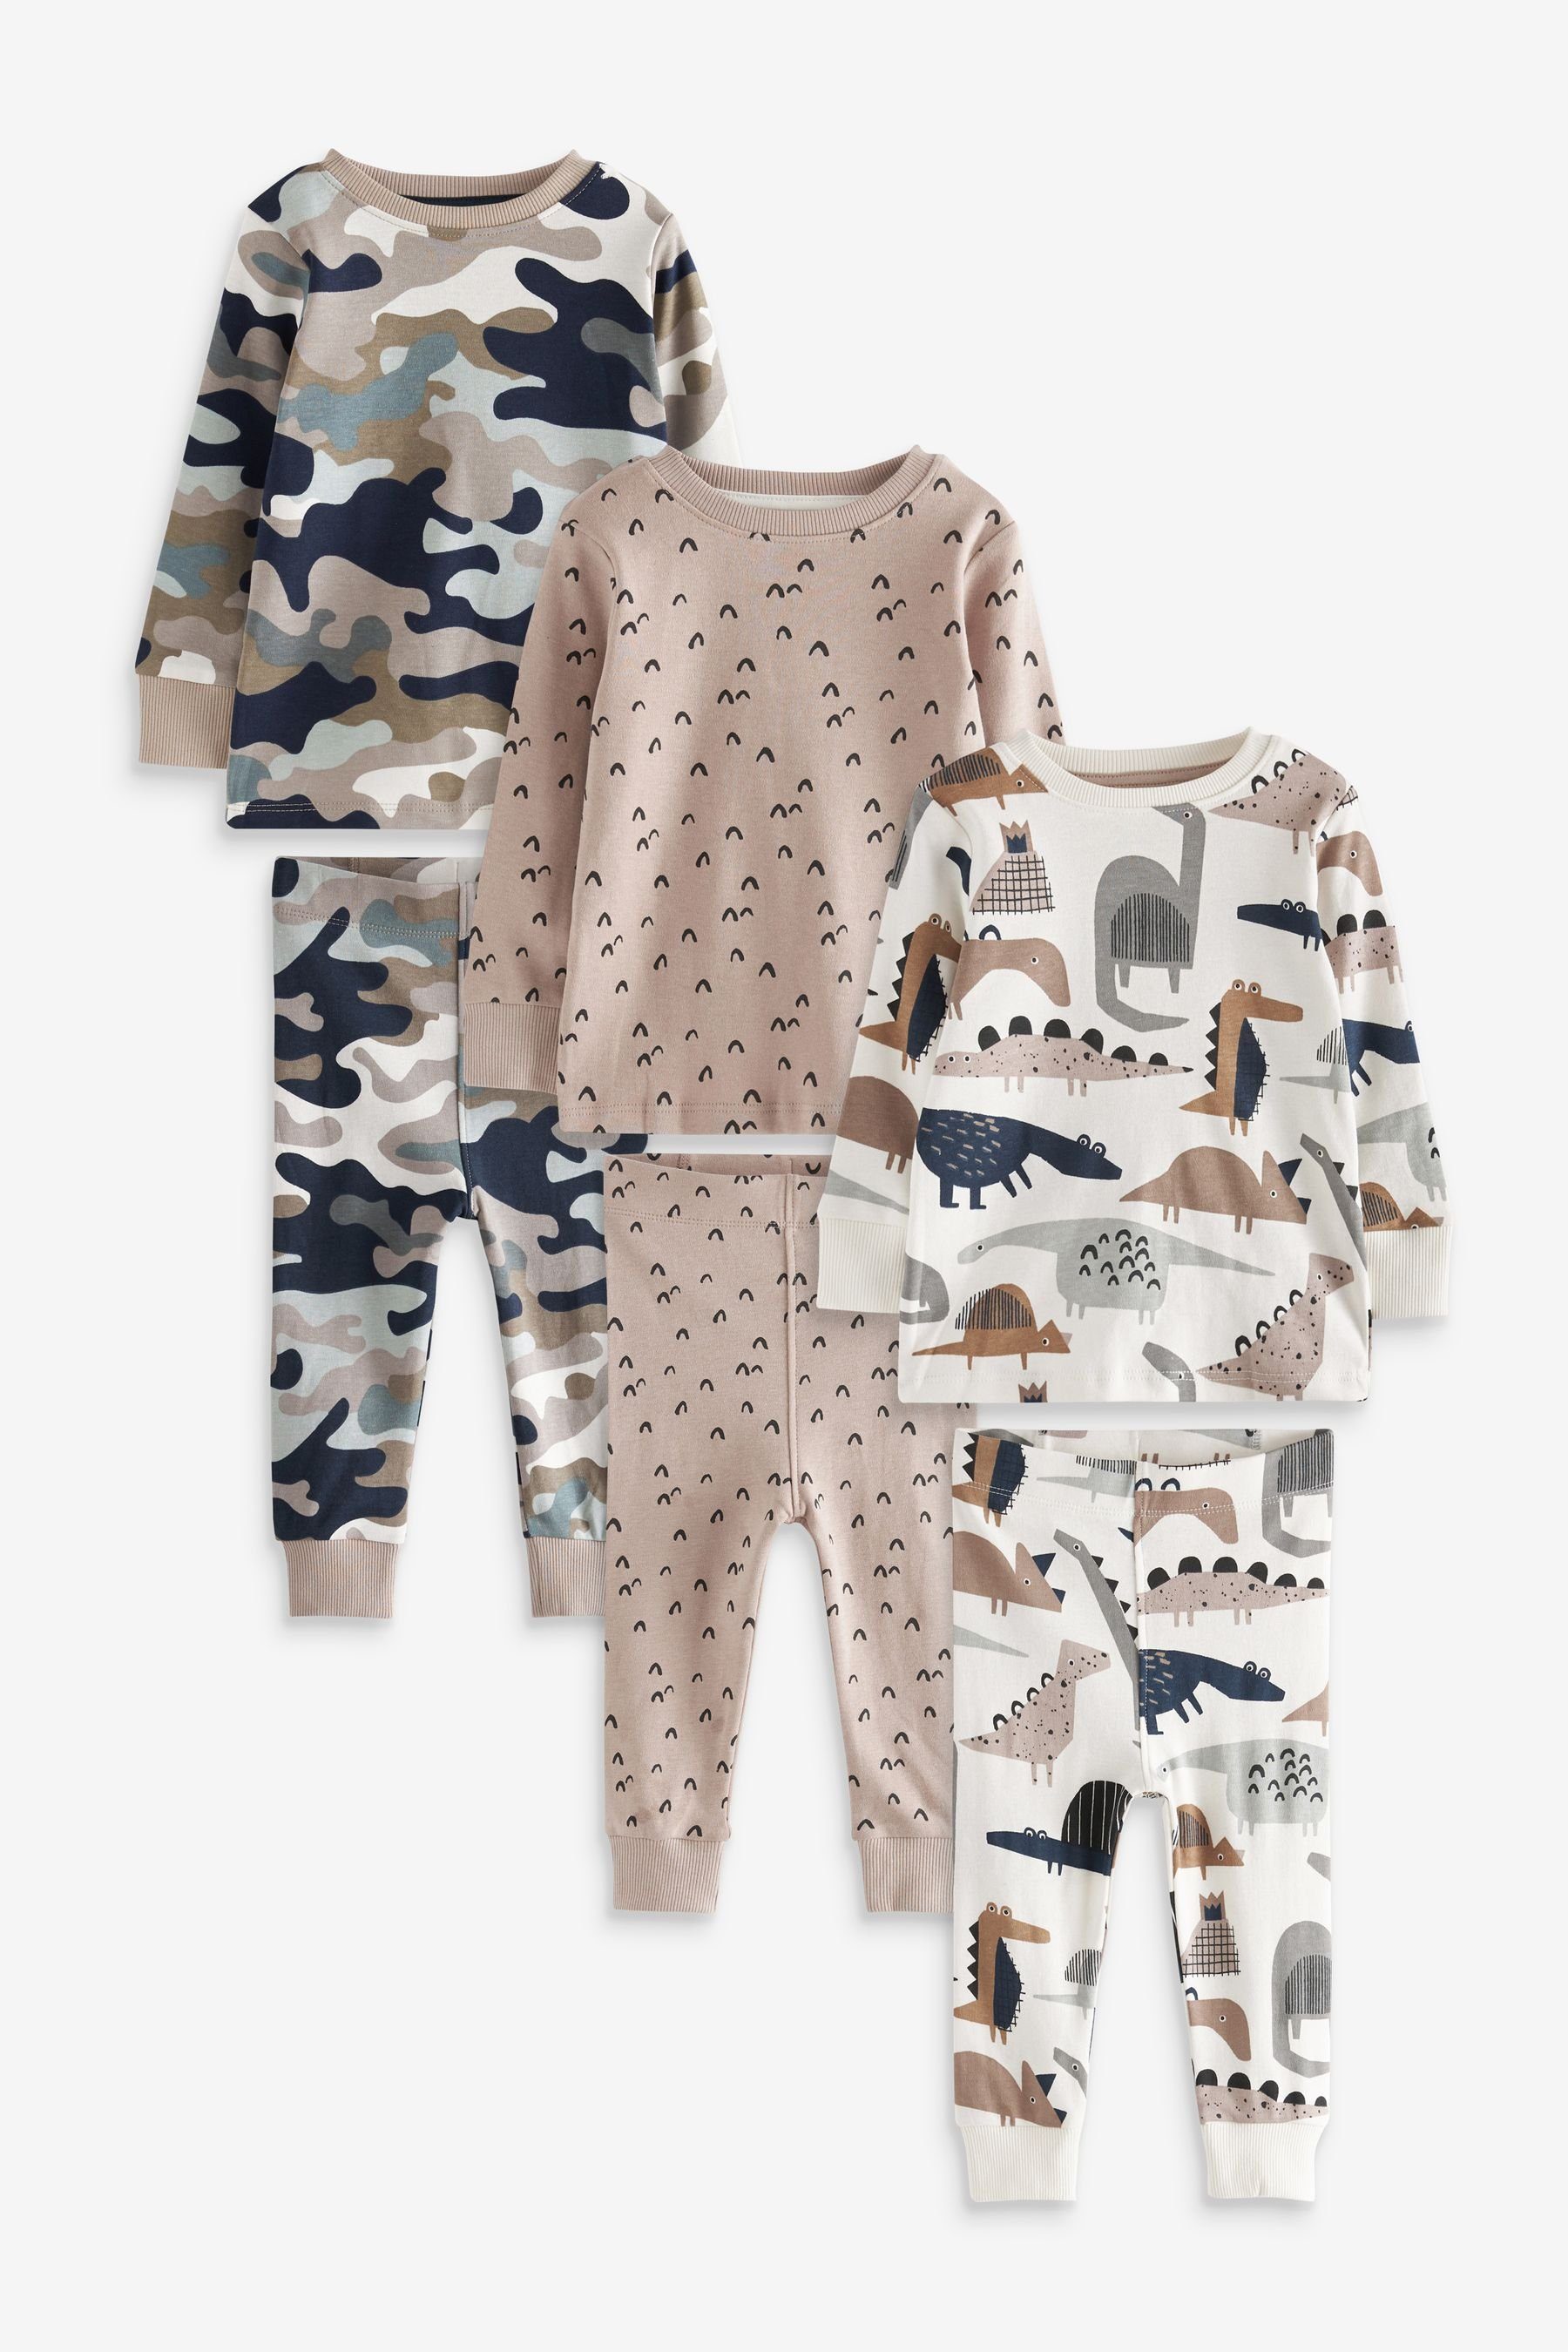 Camouflage Tan Brown Next tlg) 3er-Pack Kuschelpyjamas, Pyjama (6 Dino